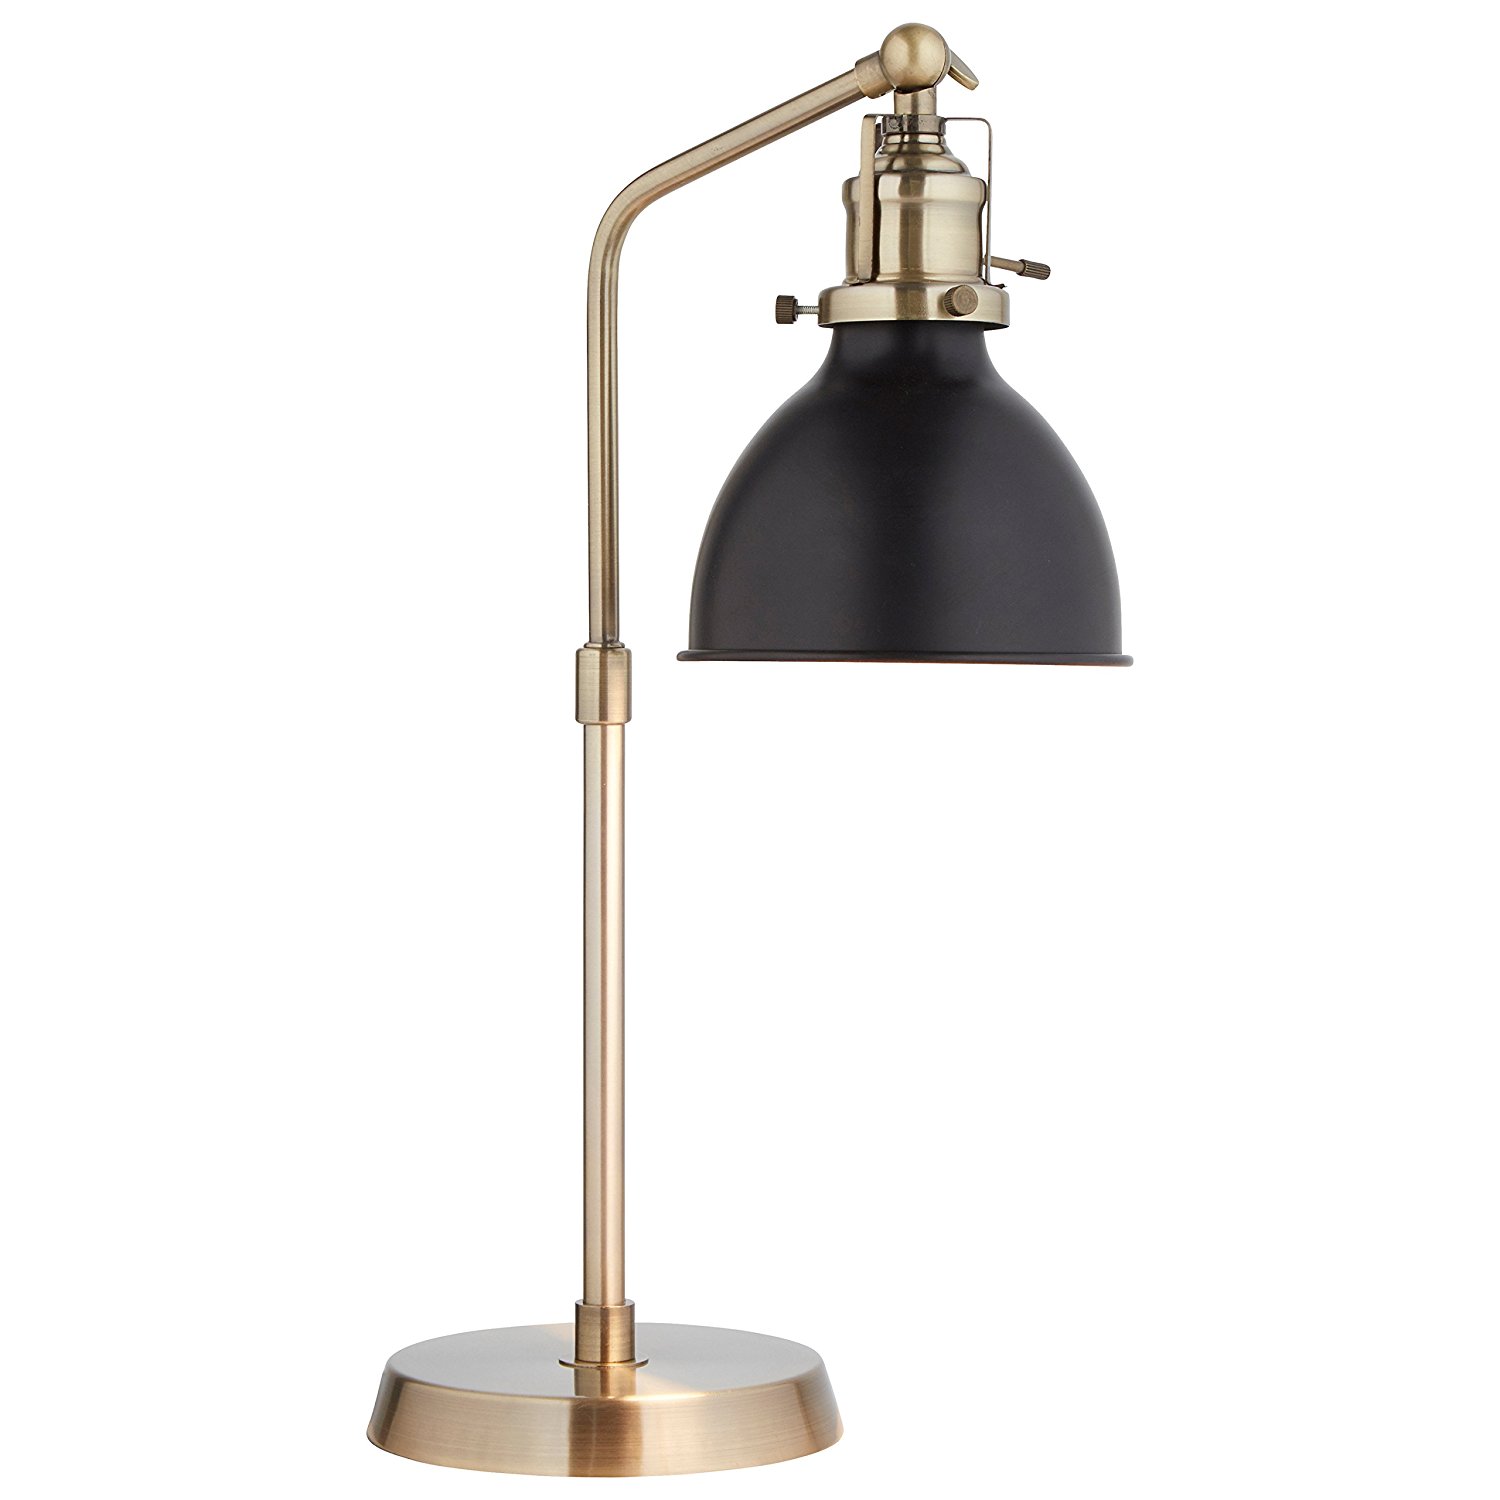 Rivet Pike Factory Industrial Table Lamp